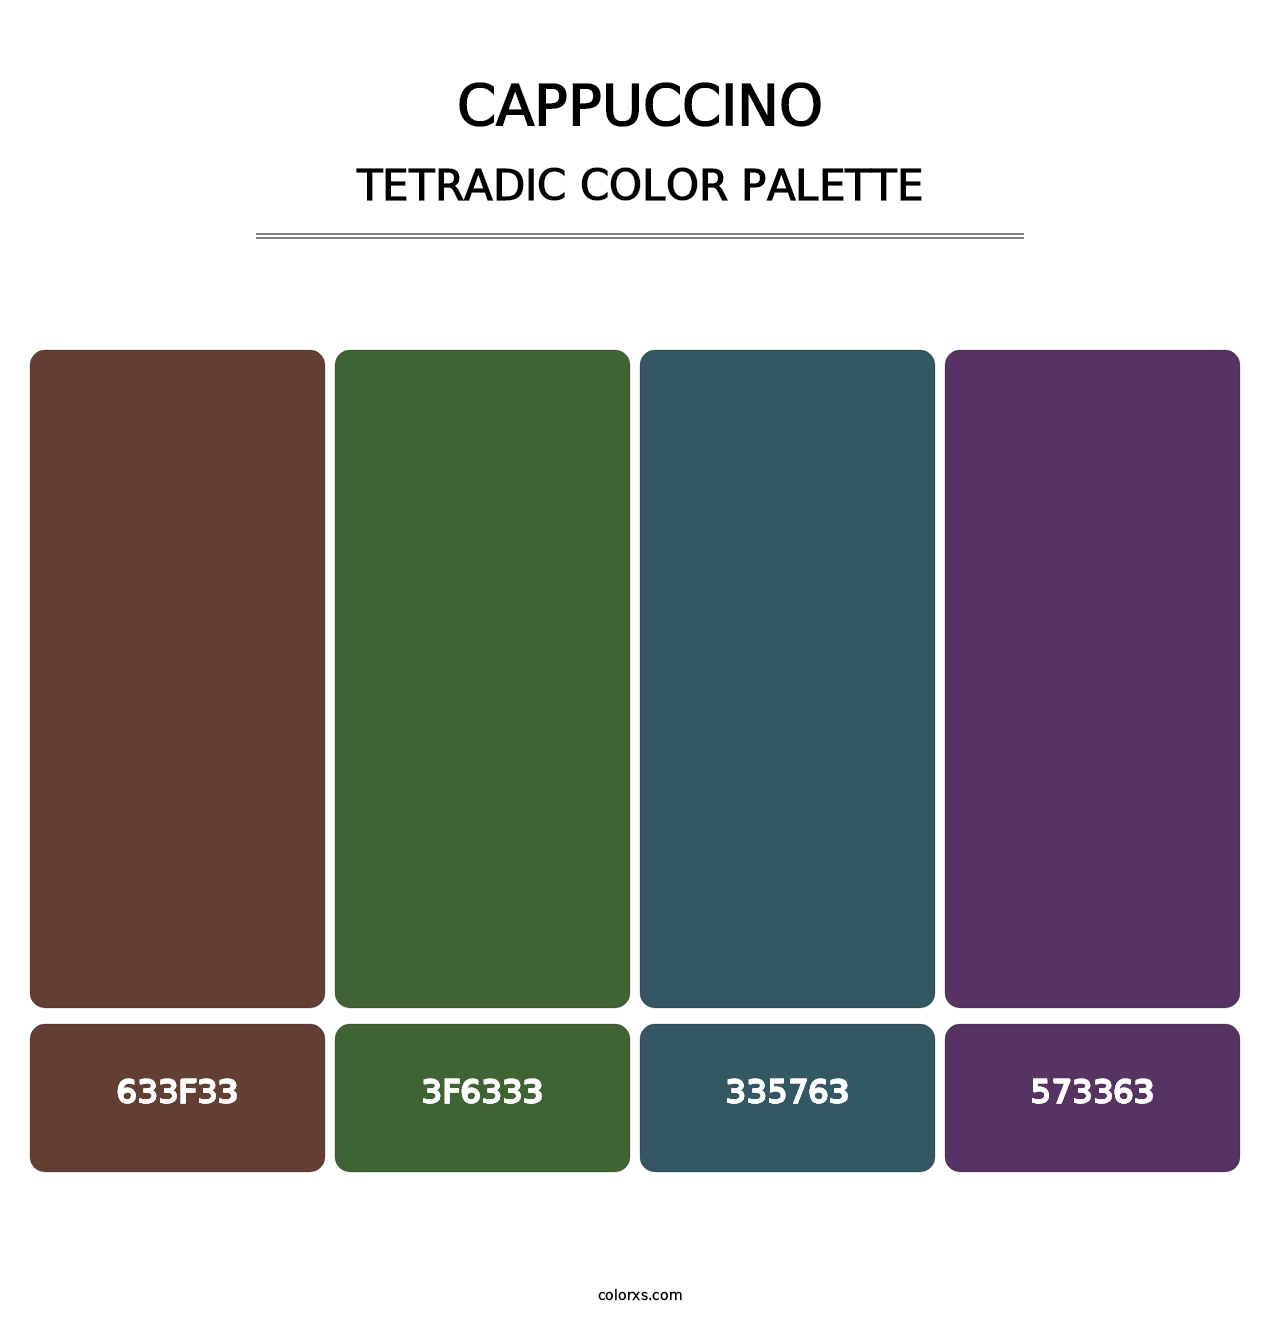 Cappuccino - Tetradic Color Palette